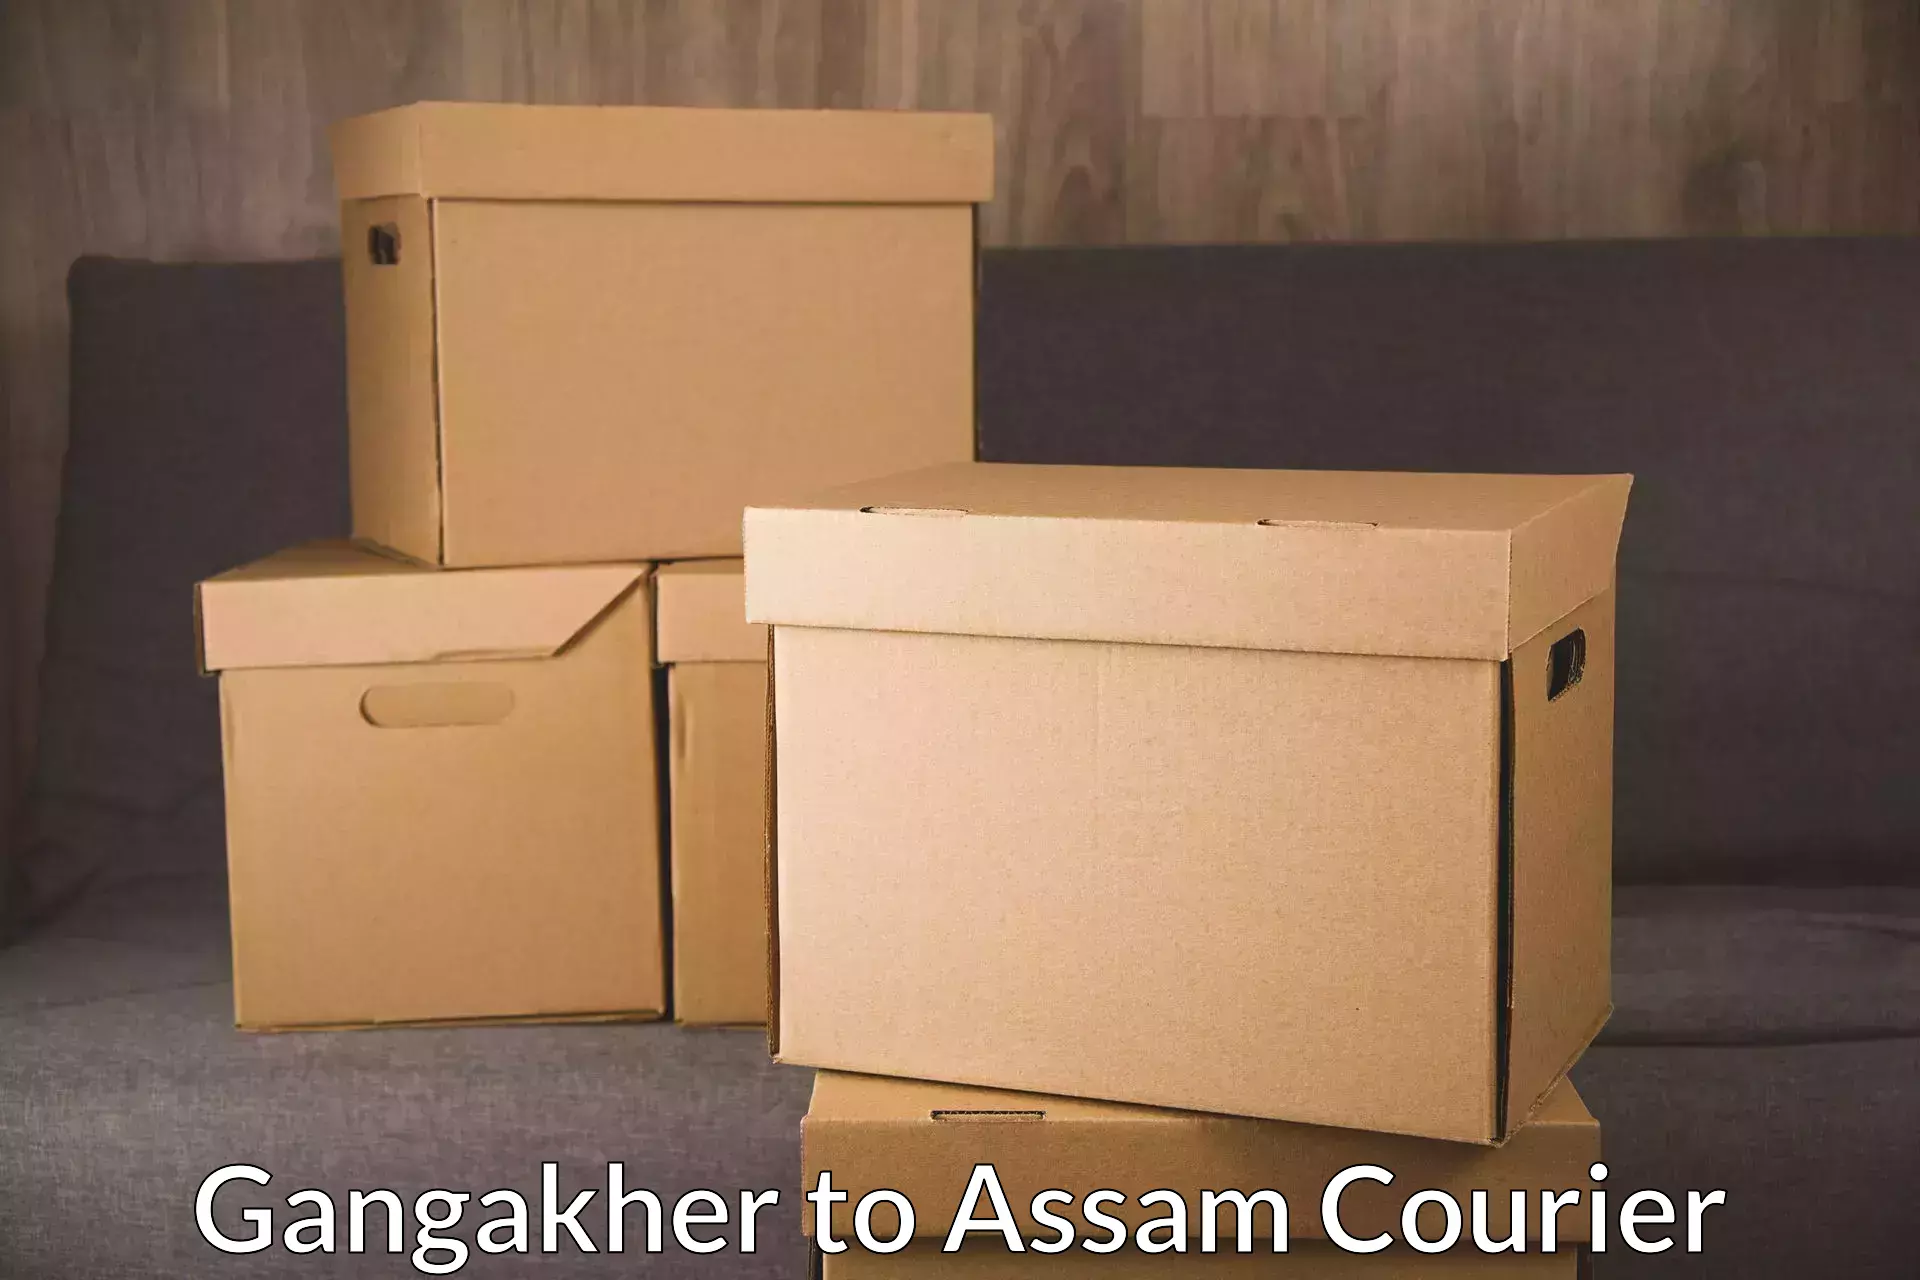 24/7 courier service Gangakher to Assam